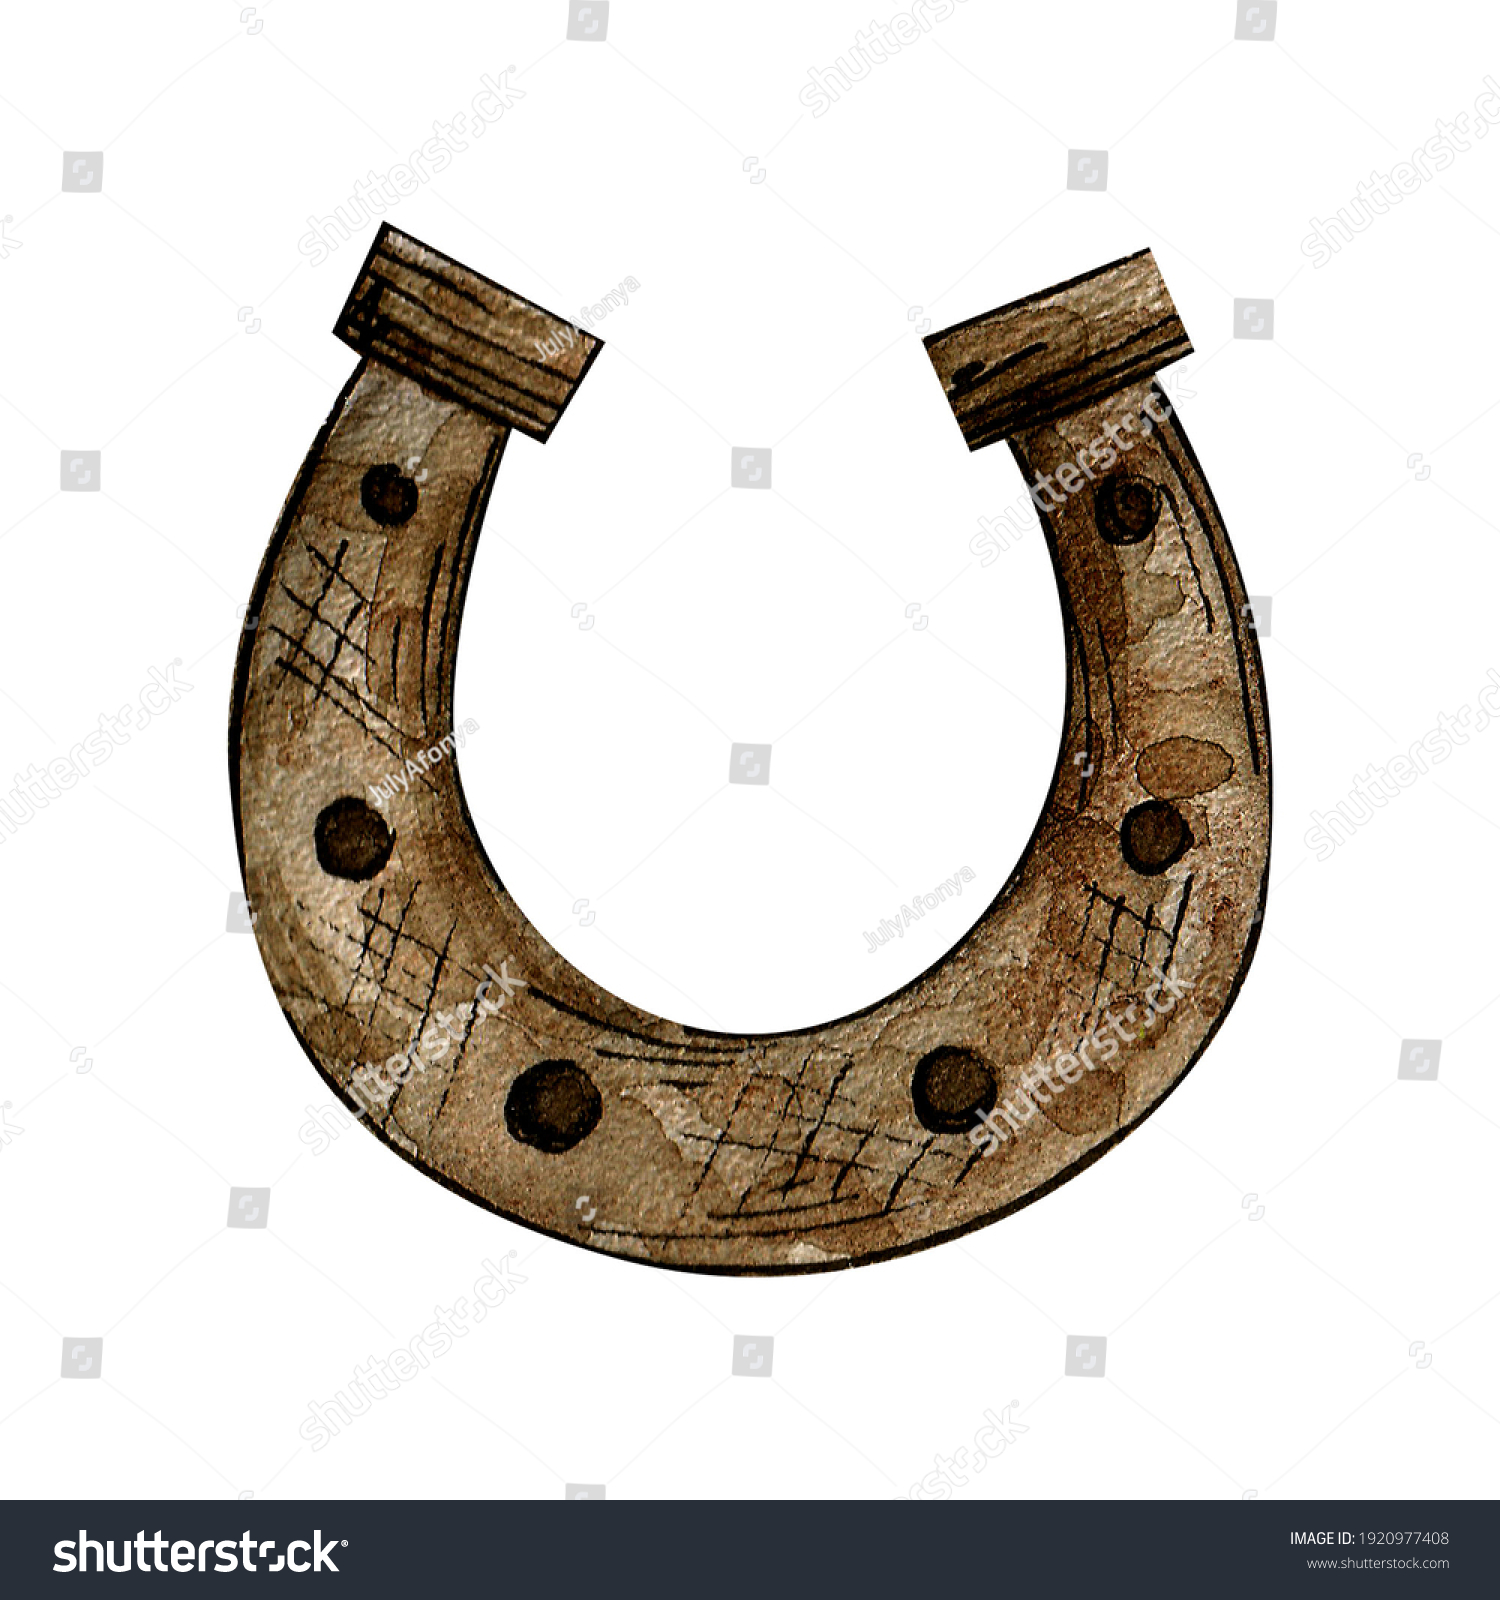 Lucky horseshoe Images, Stock Photos & Vectors | Shutterstock